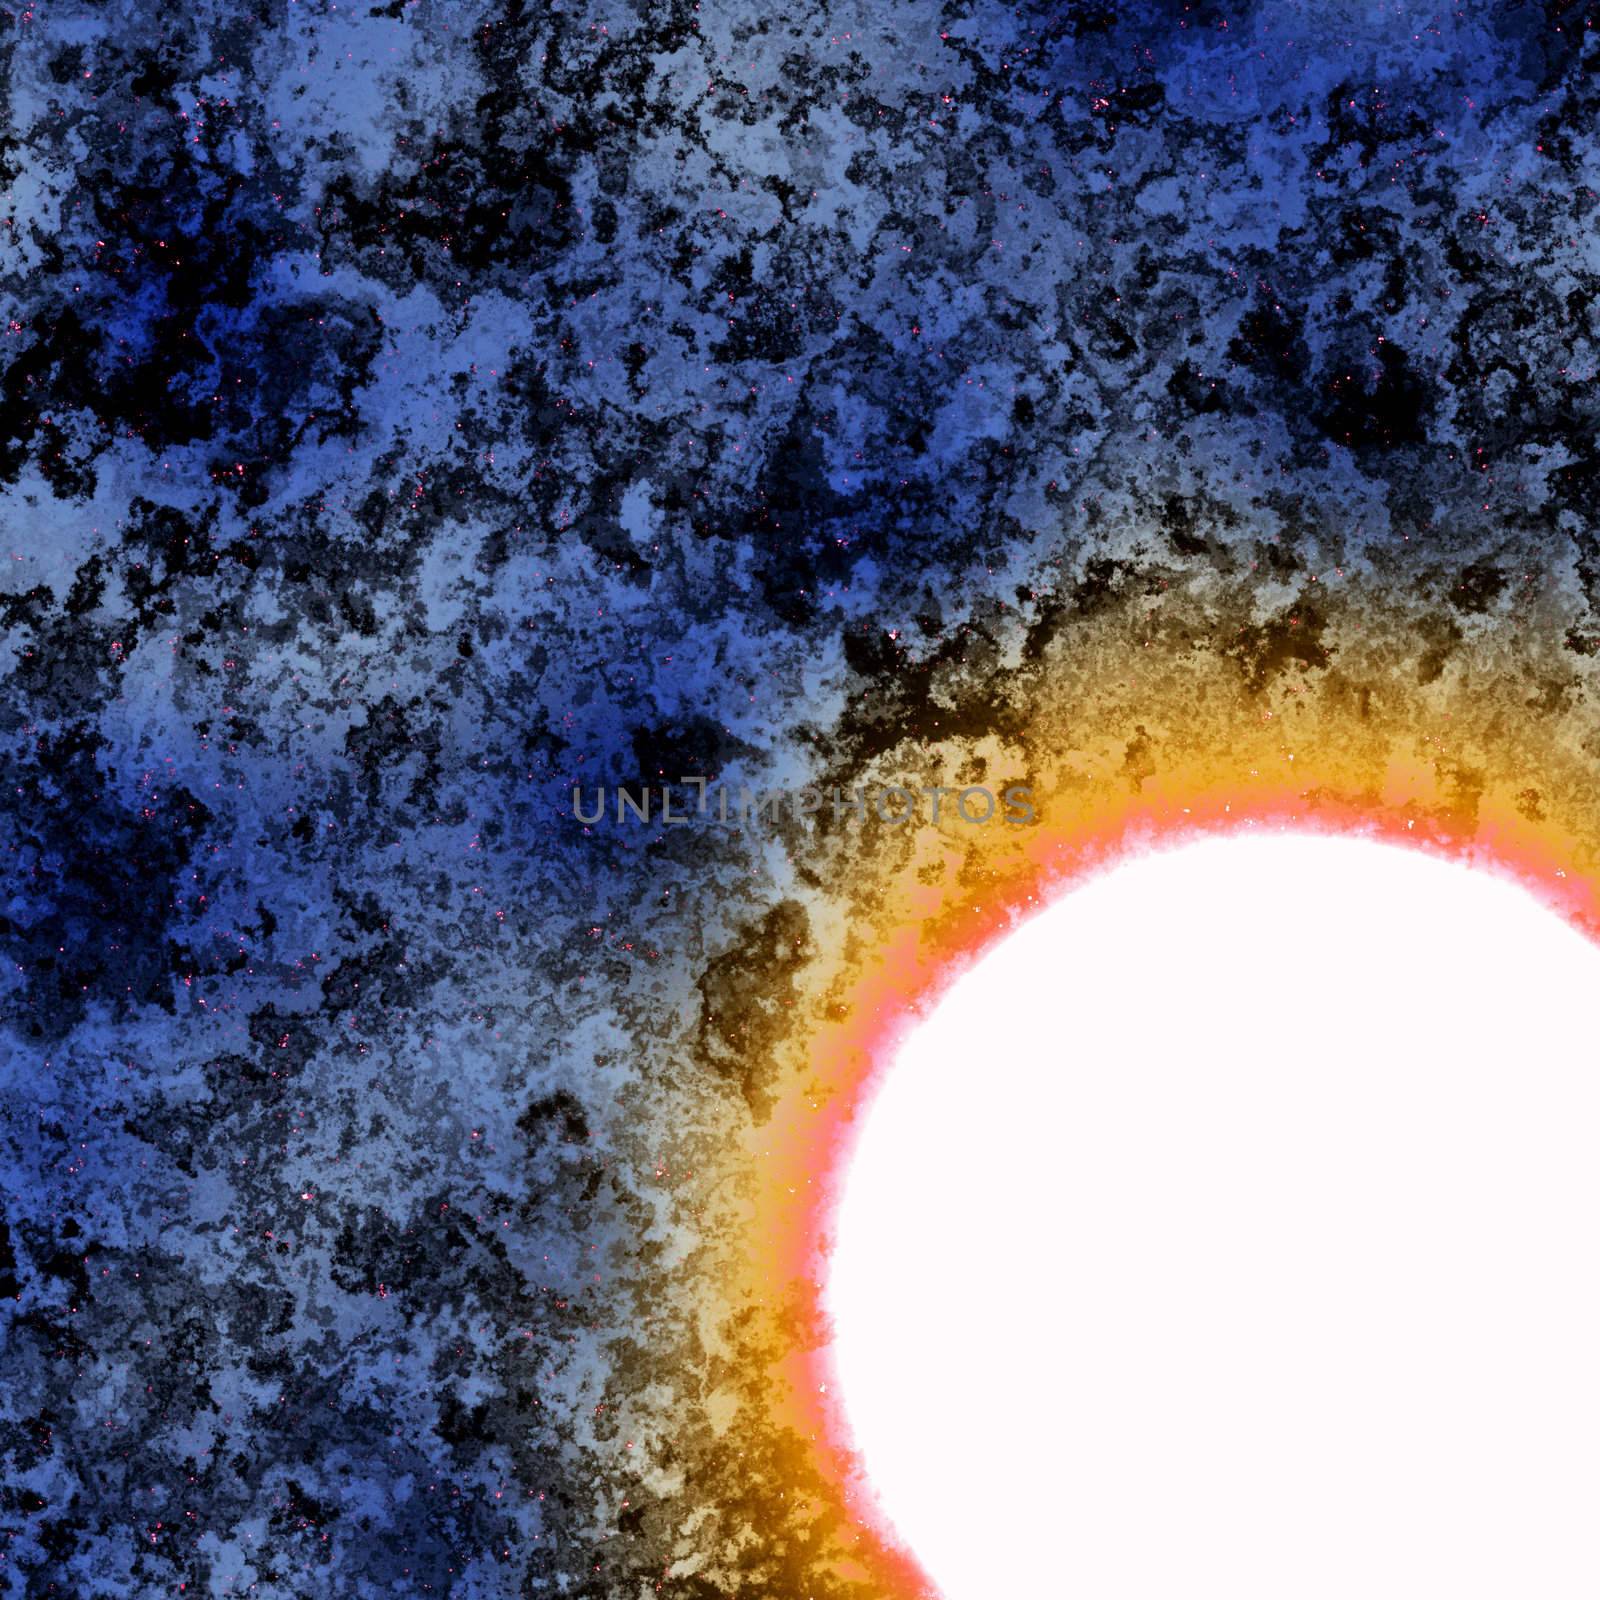 Supernova burst in deep space by andromeda13